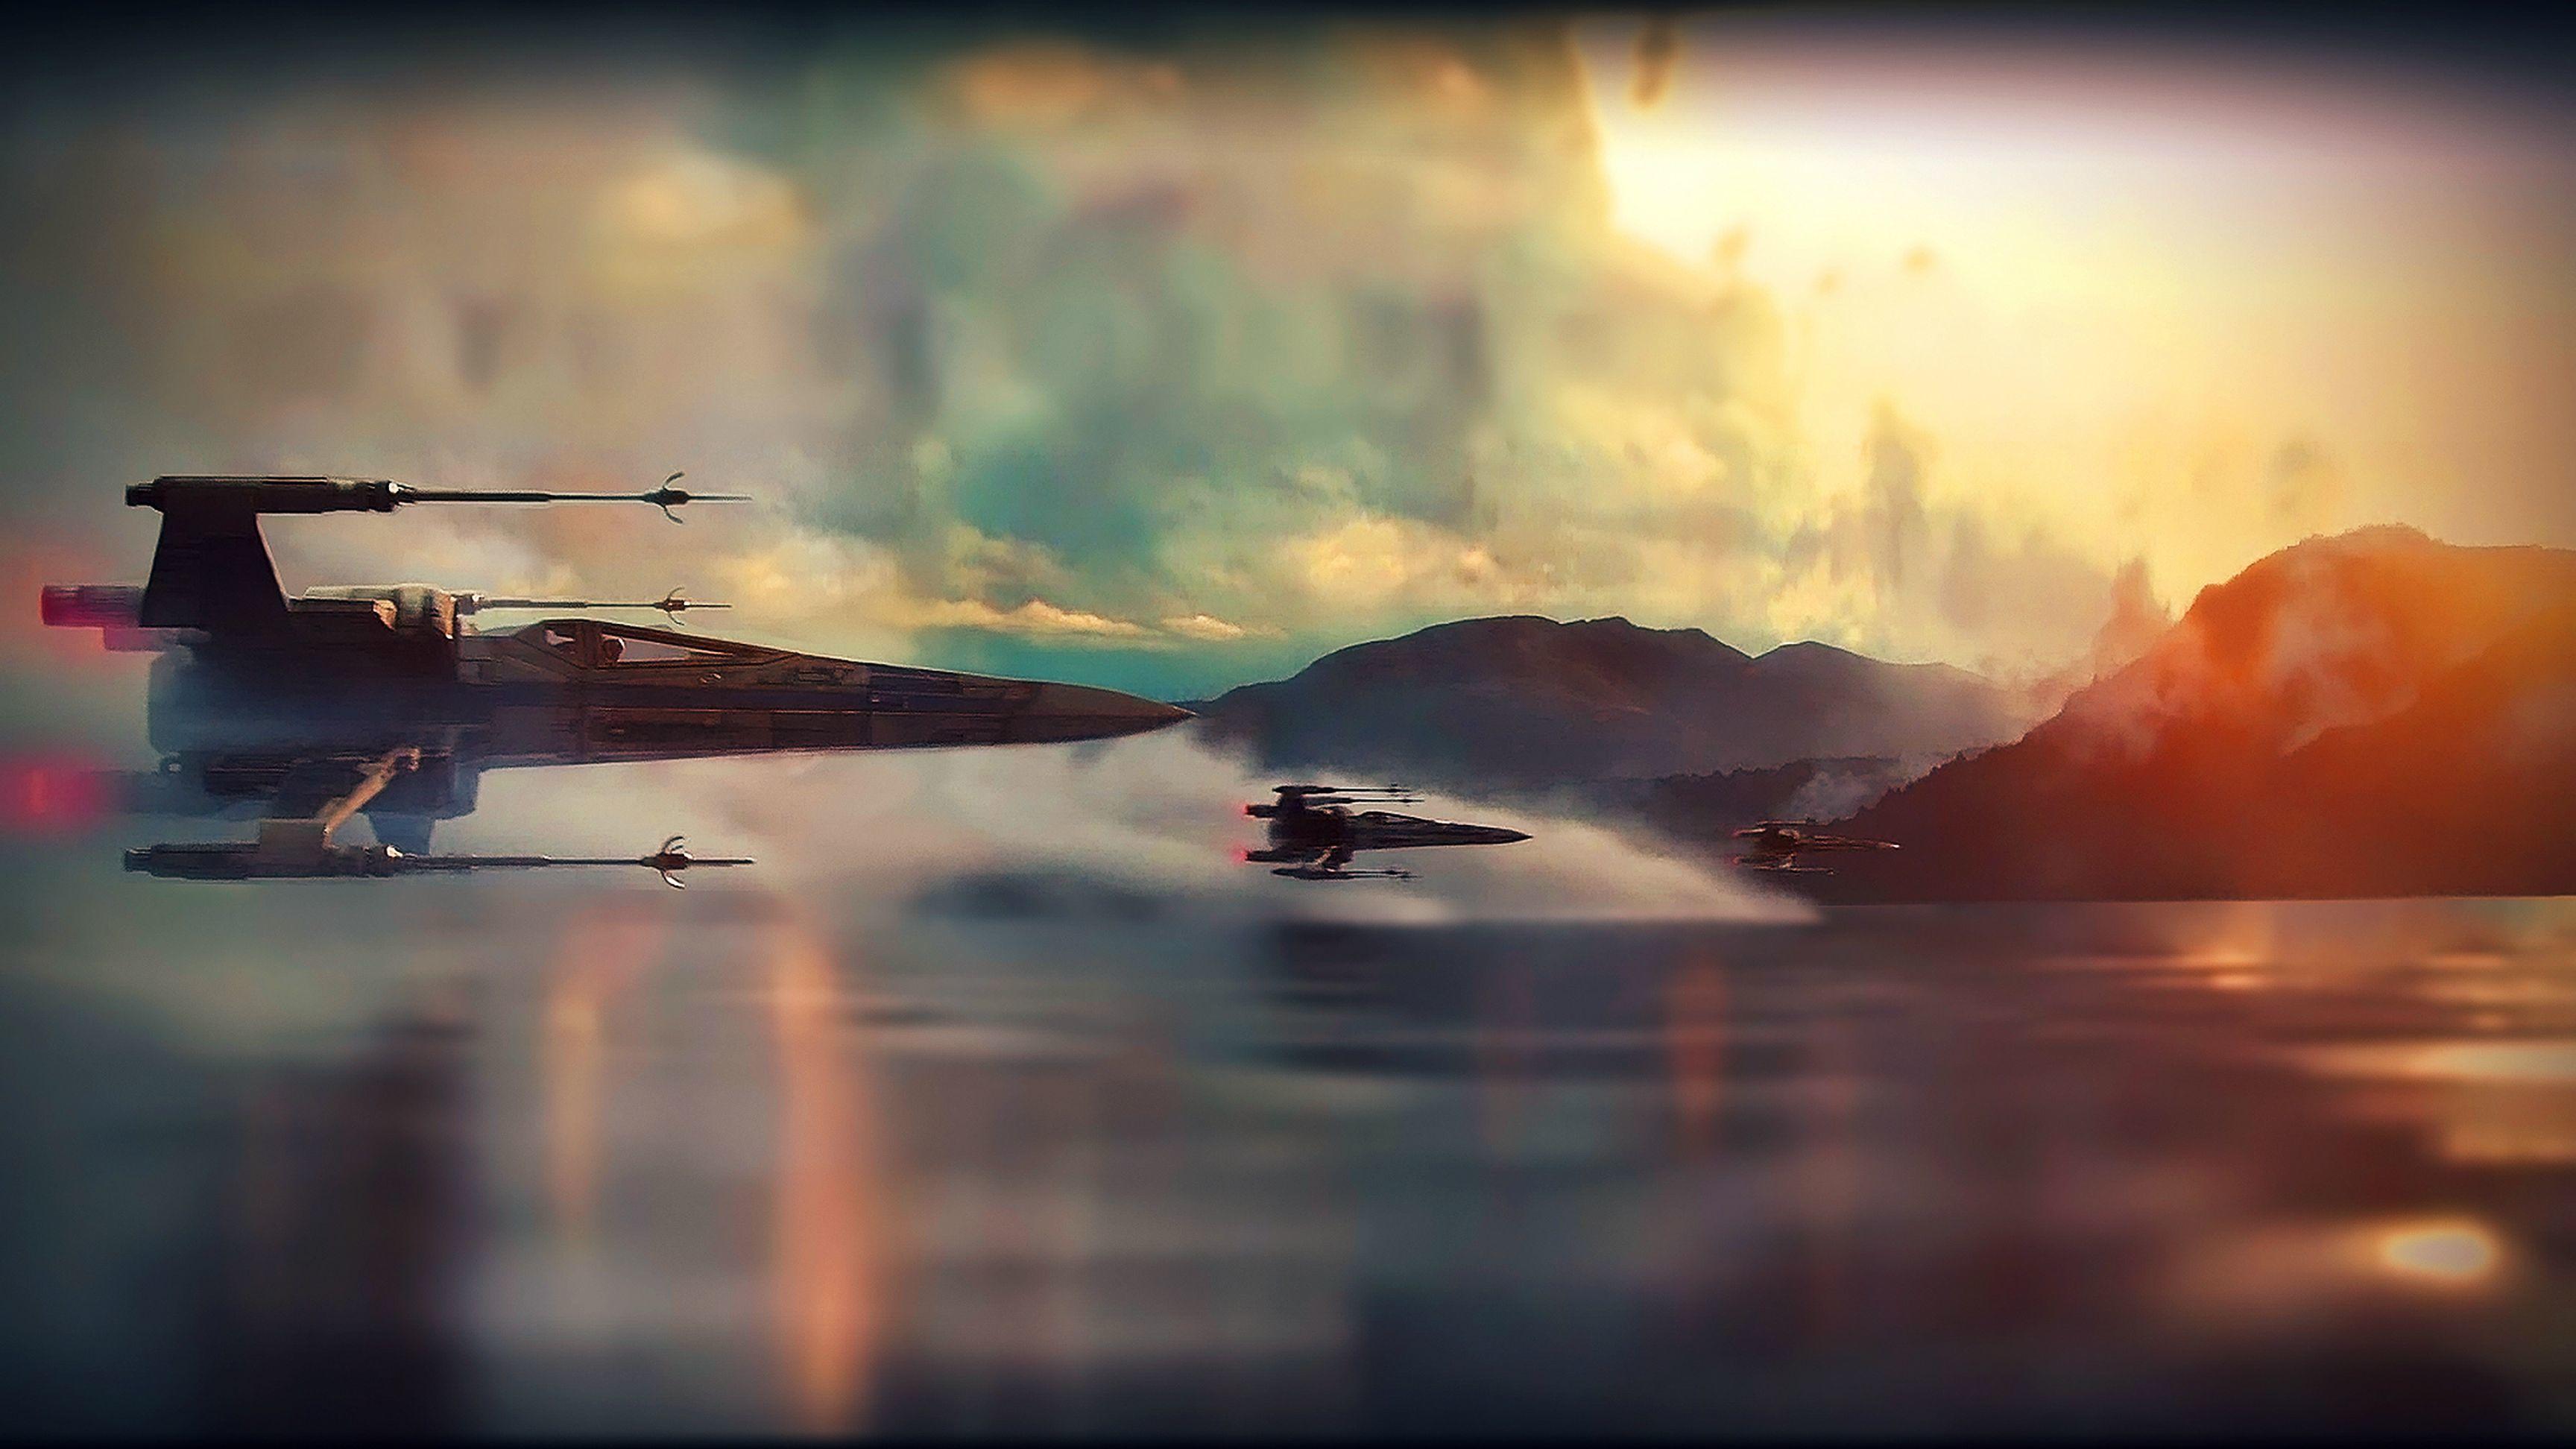 Star Wars Spaceships wallpaper 2018 in Star Wars